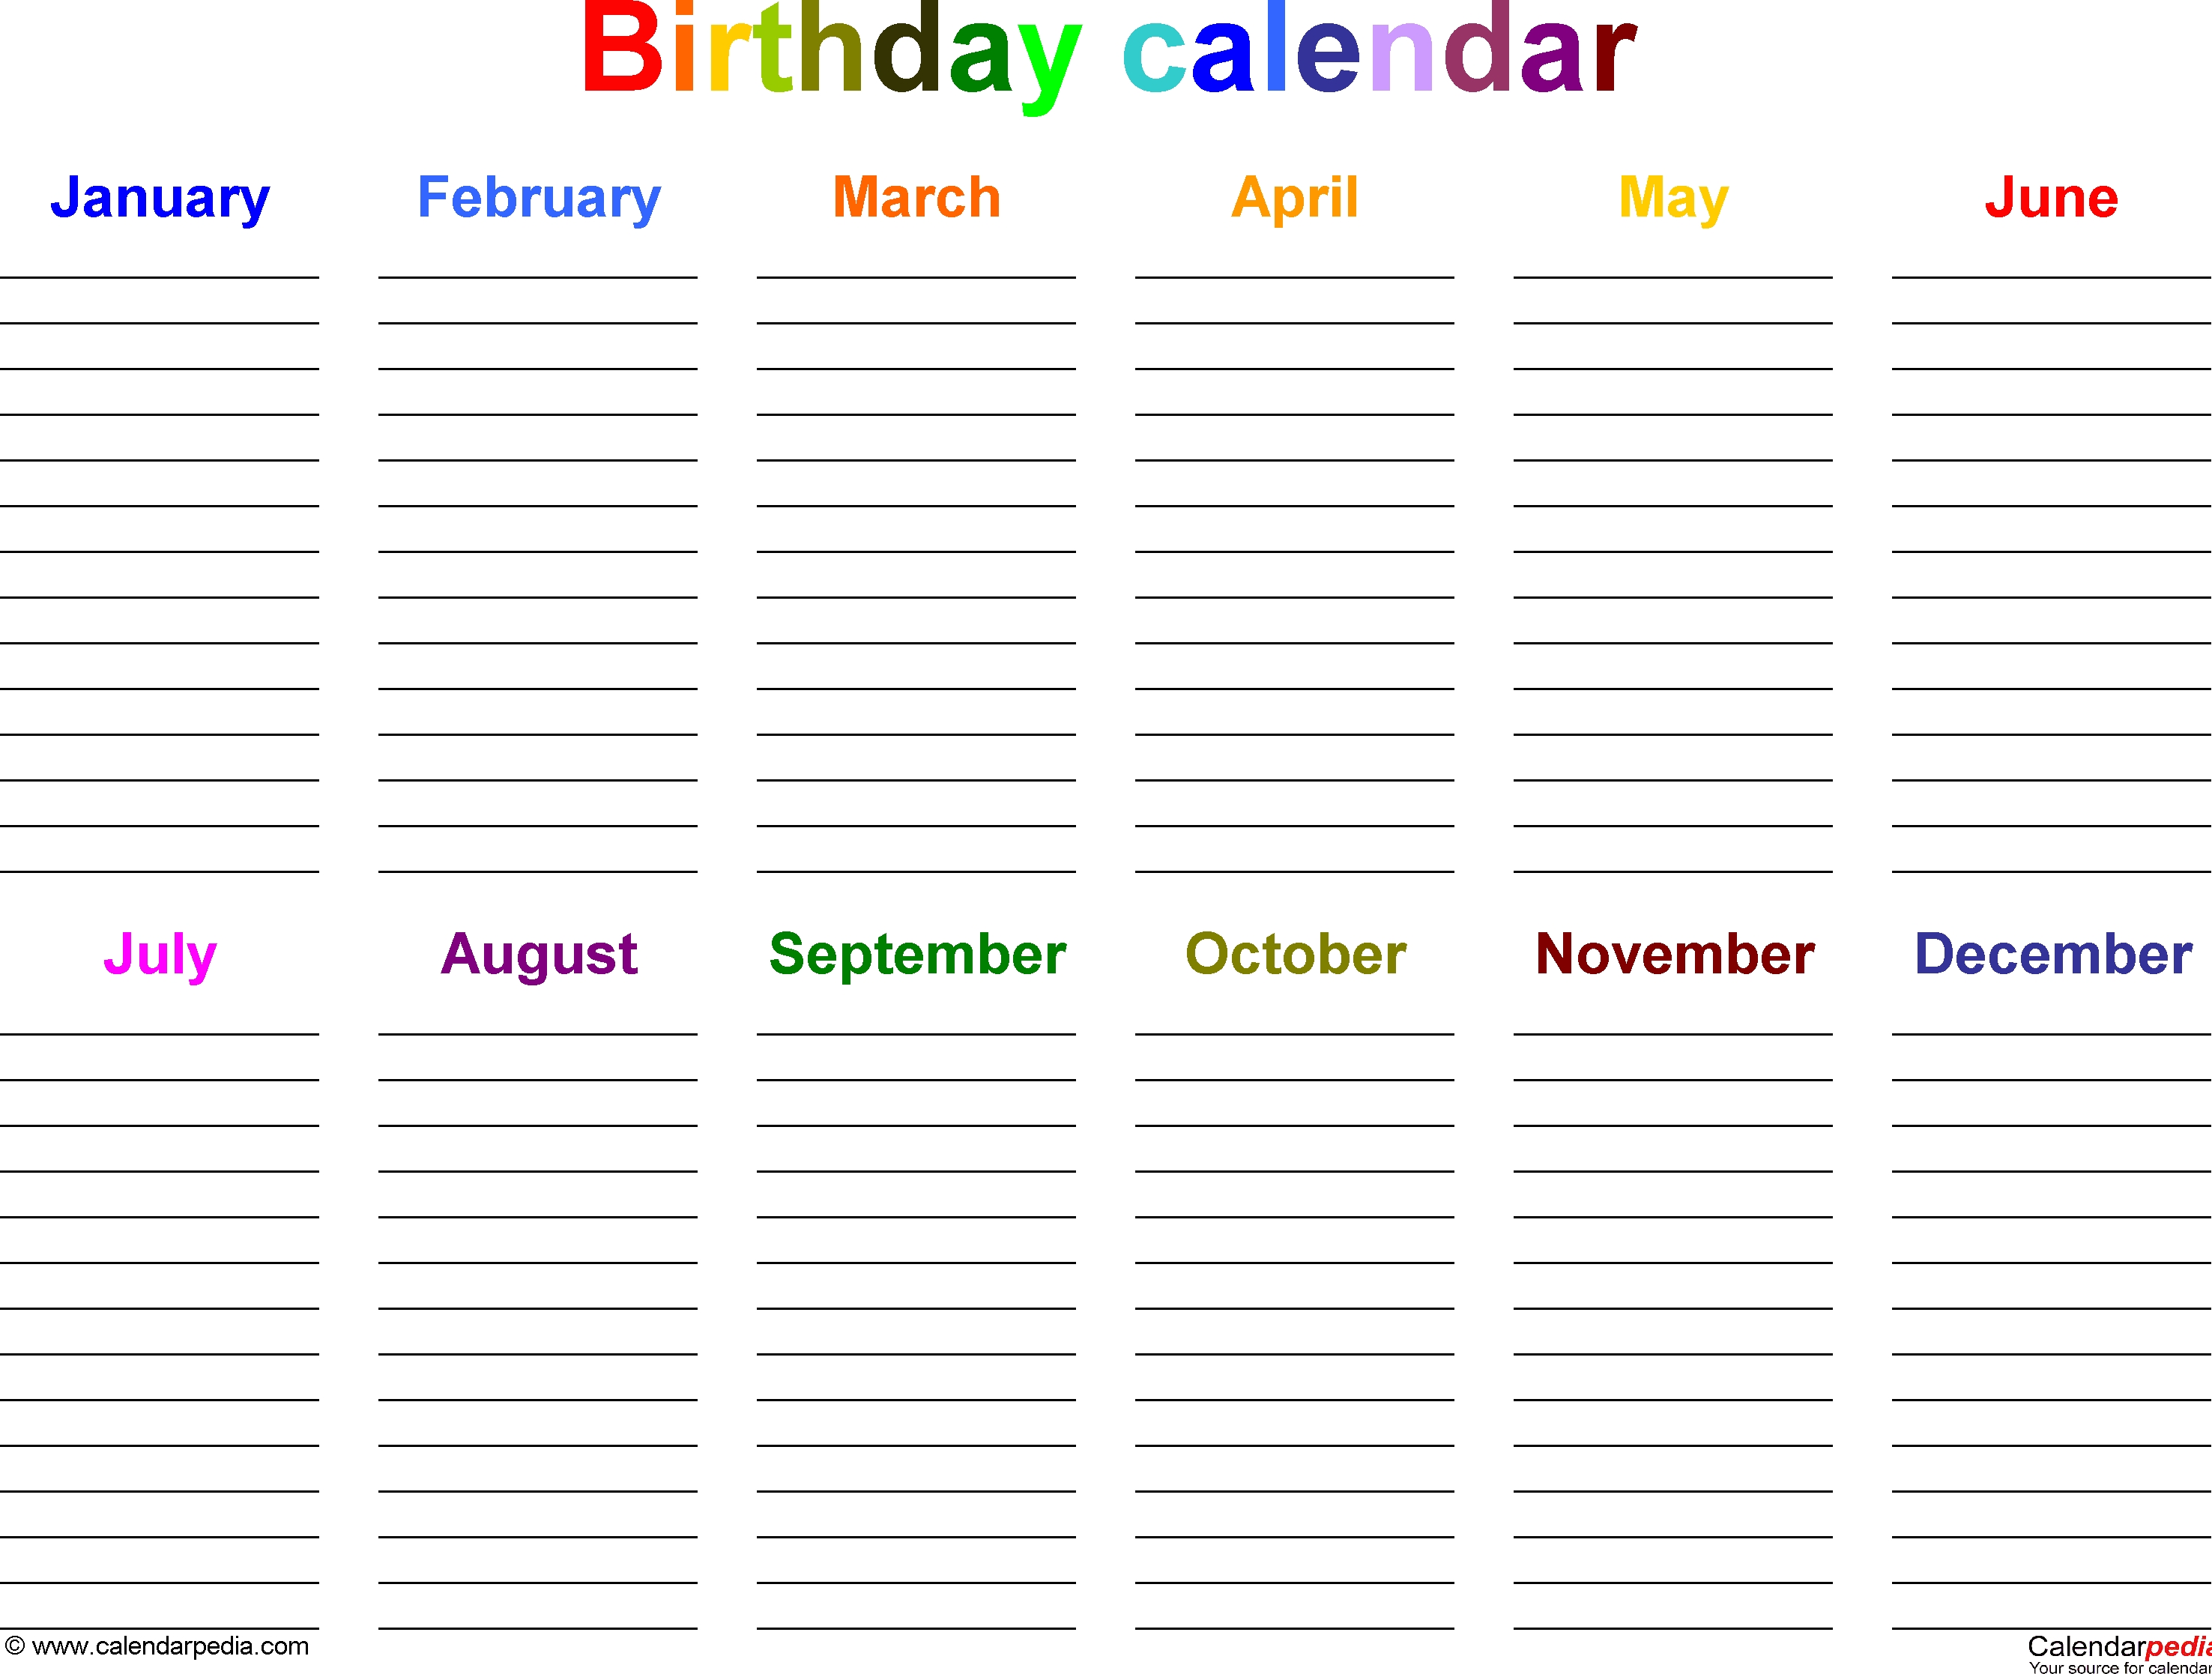 Birthday Calendars - 7 Free Printable Word Templates within Free Printable Birthday Chart Templates